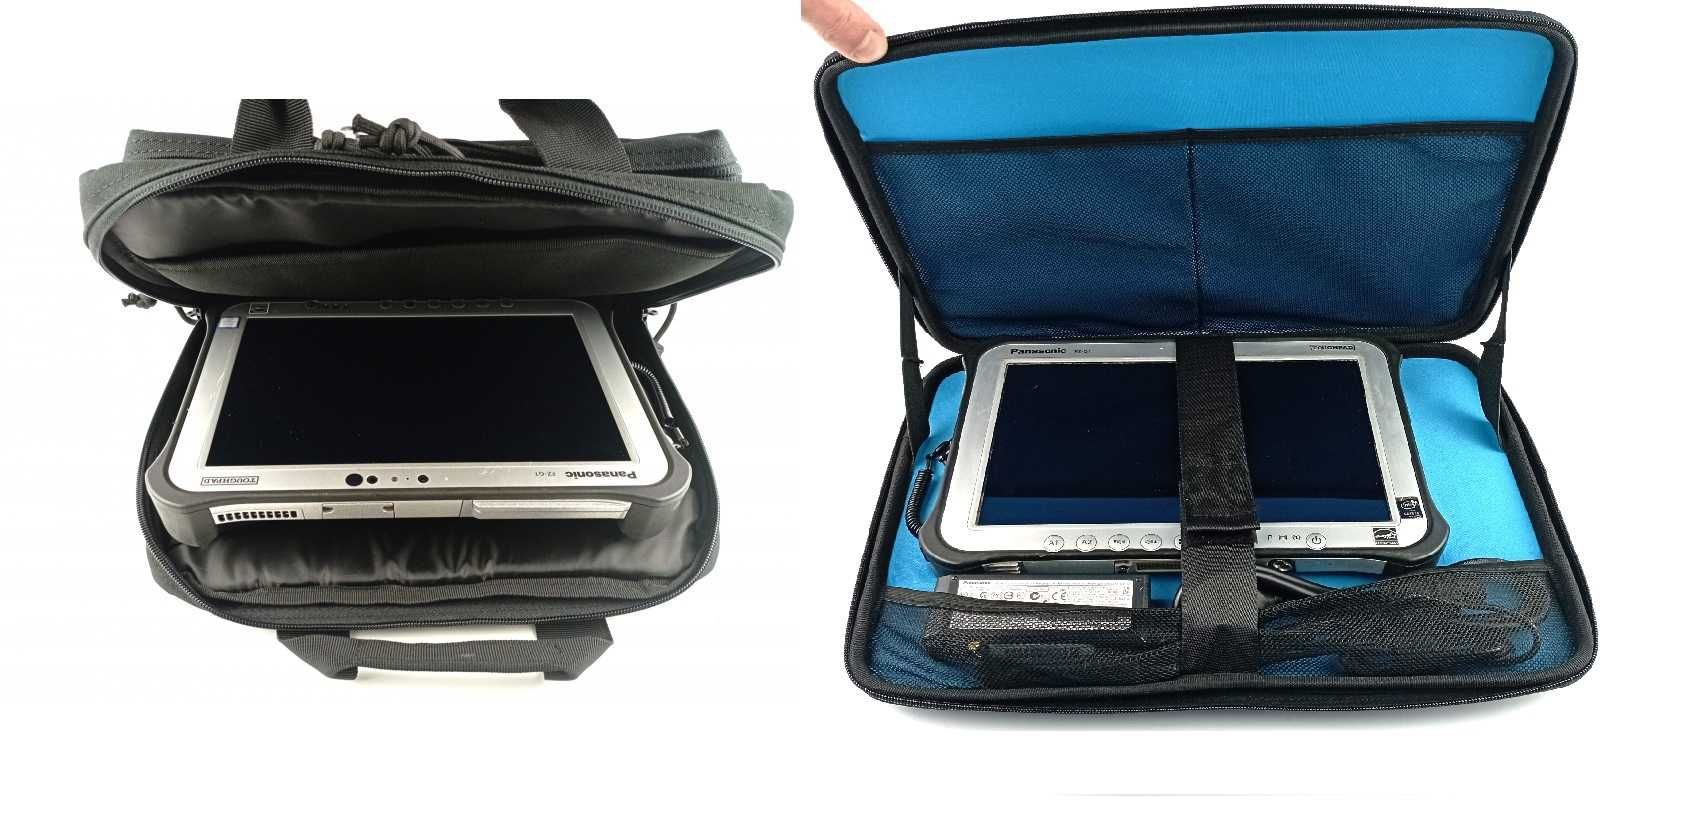 Захищений планшет Panasonic Toughpad FZ-G1 MK3 (i5-5300) з 3G